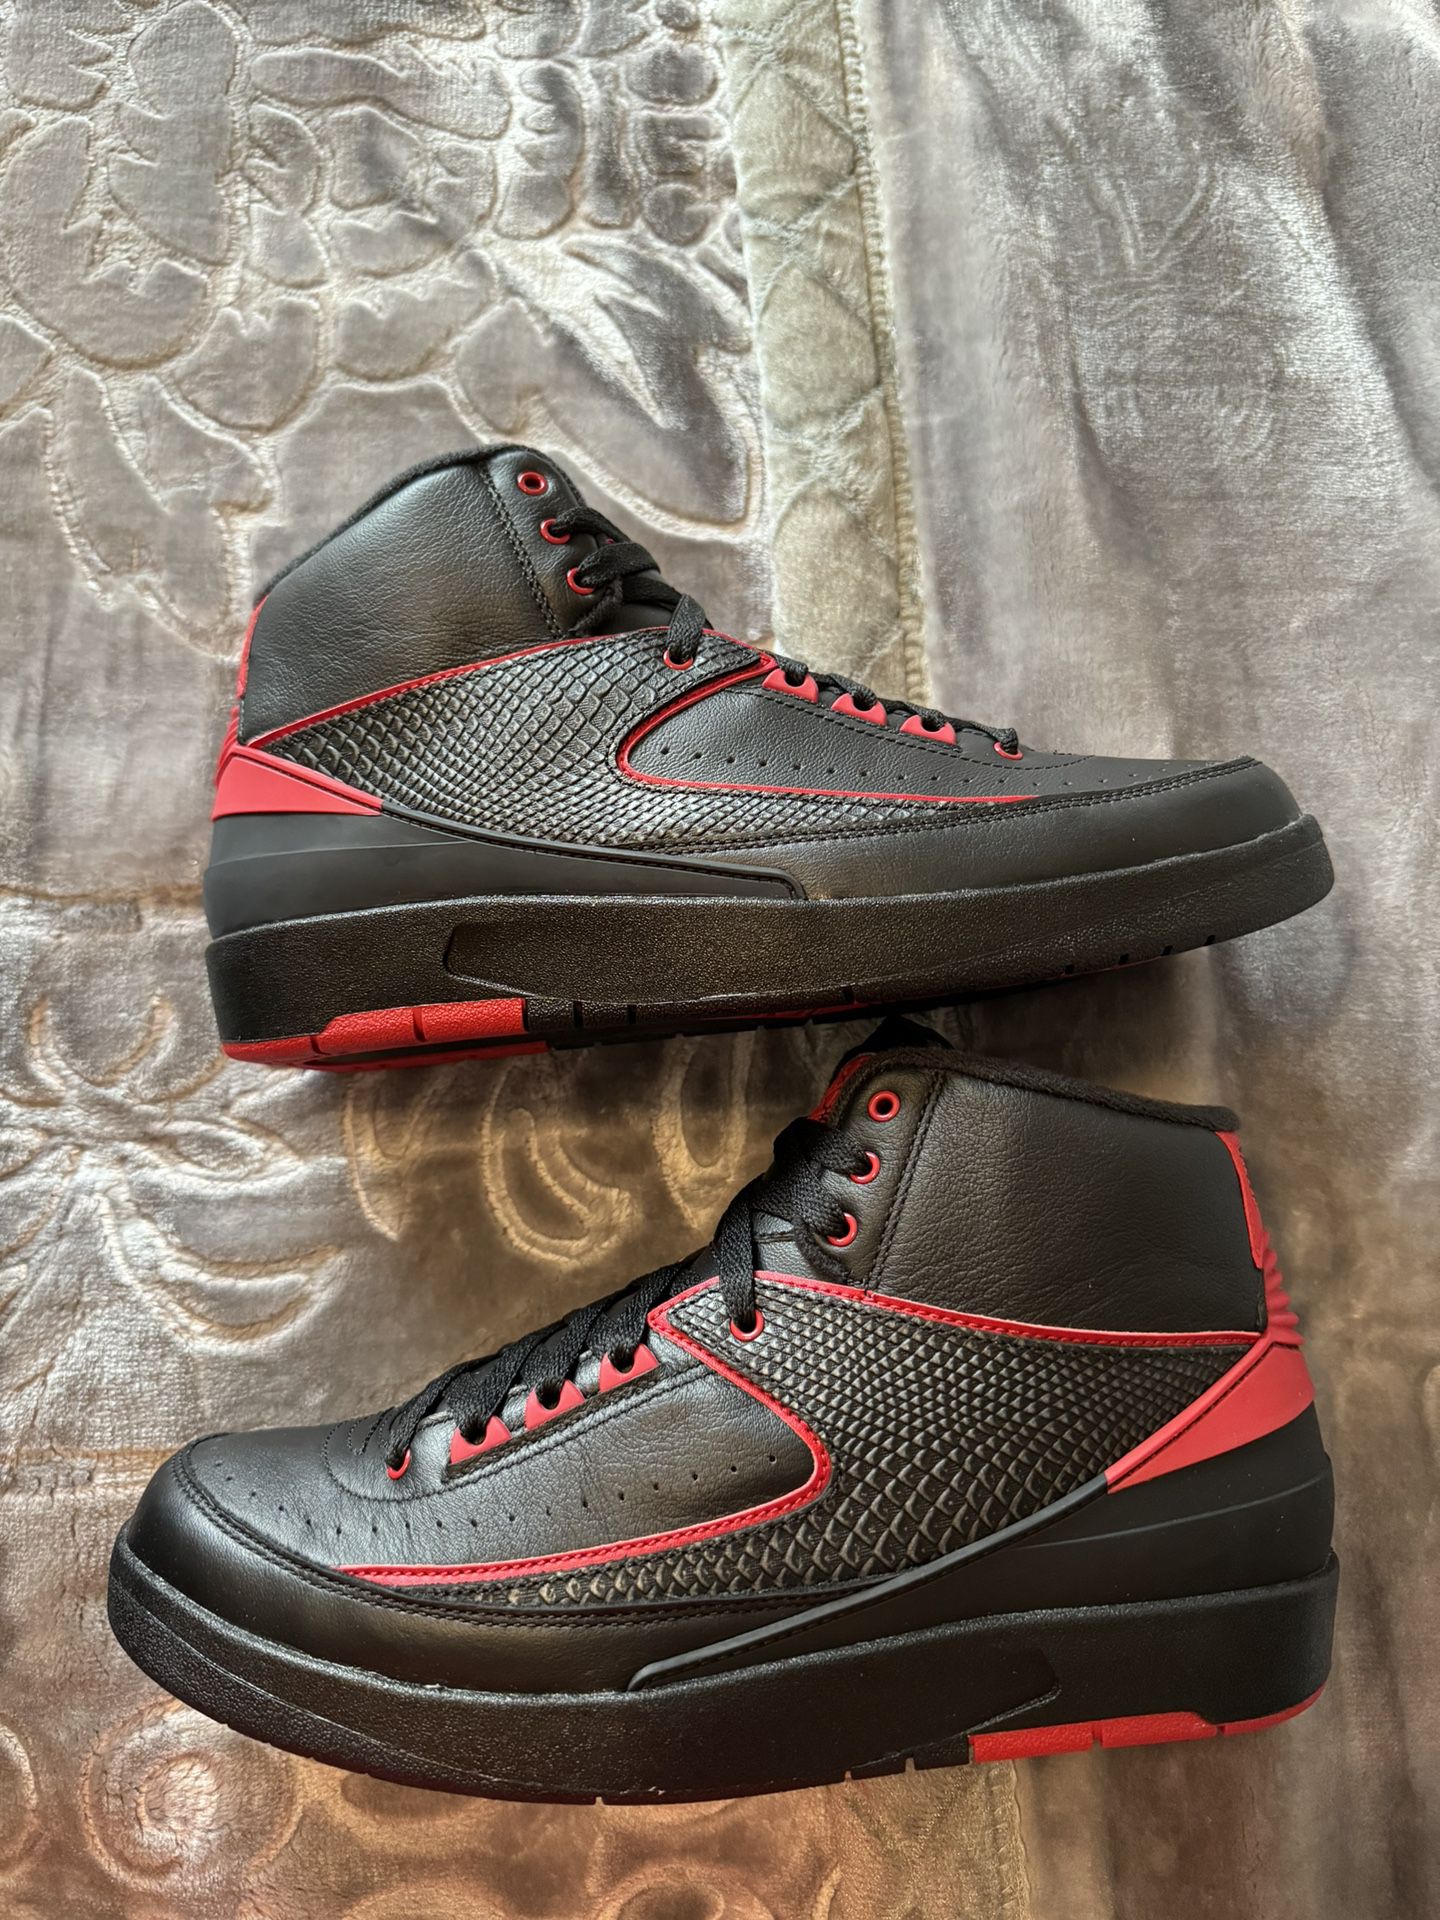 Air Jordan 2 Retro “Alternate 87” Size 9.5